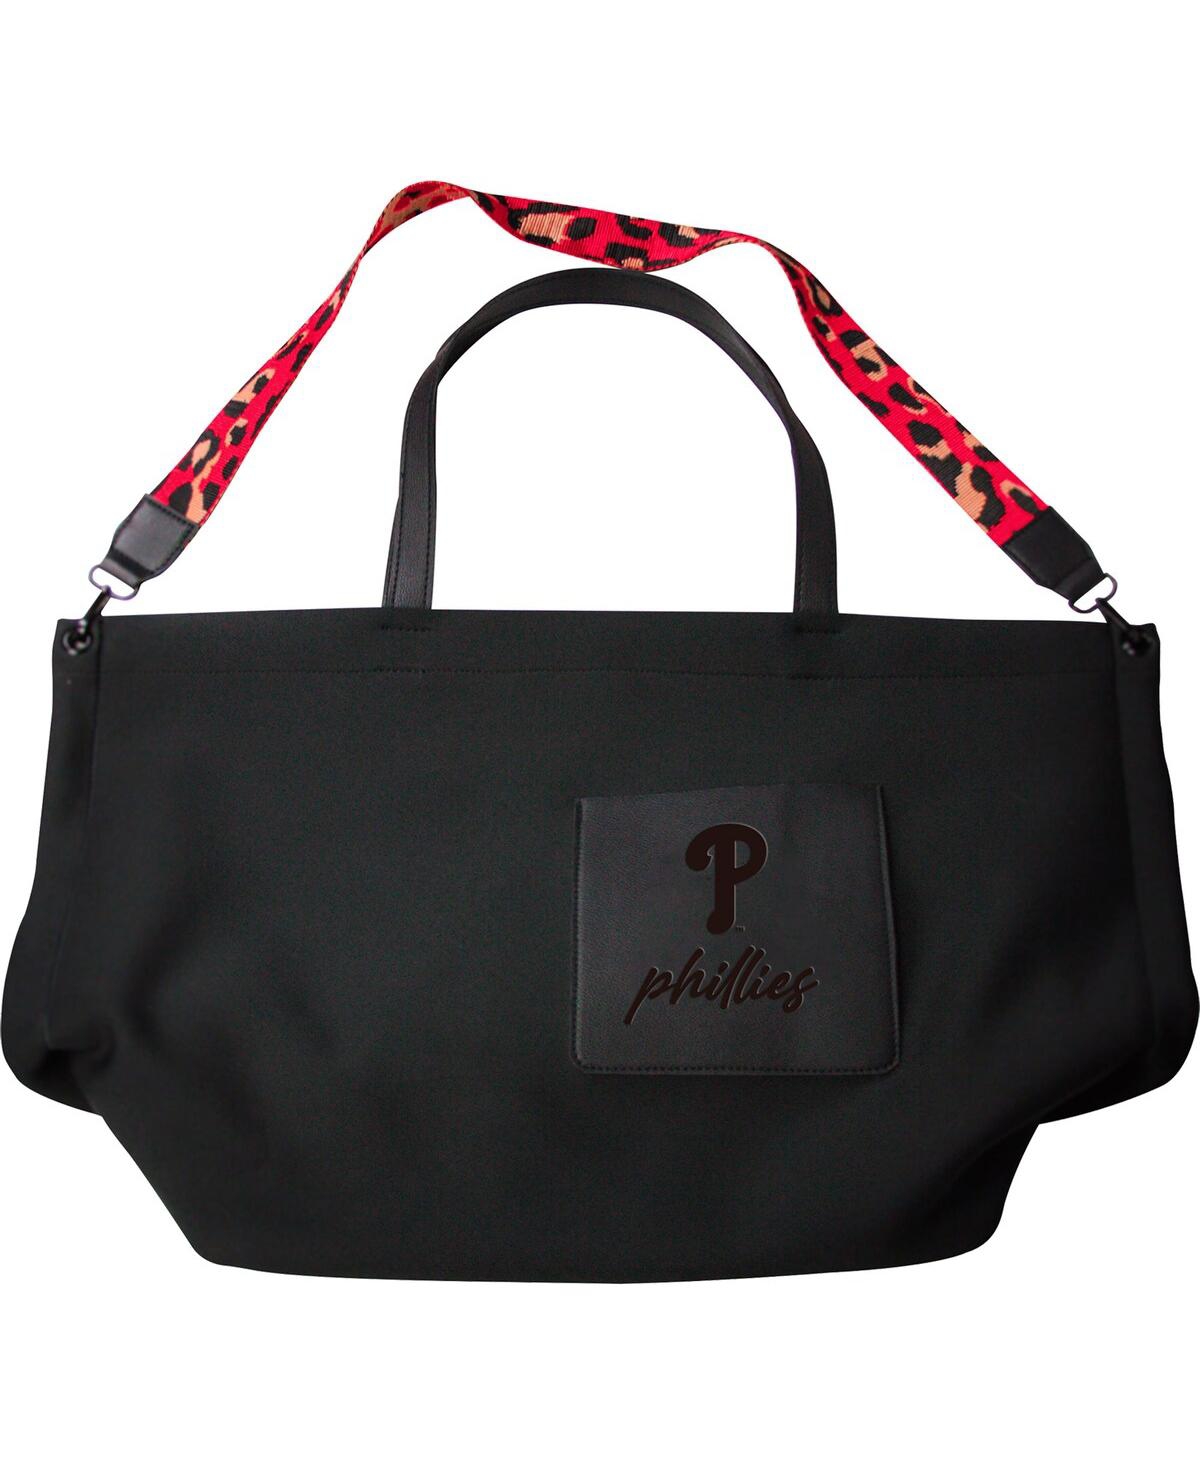 Women's Philadelphia Phillies Tote Bag - Black